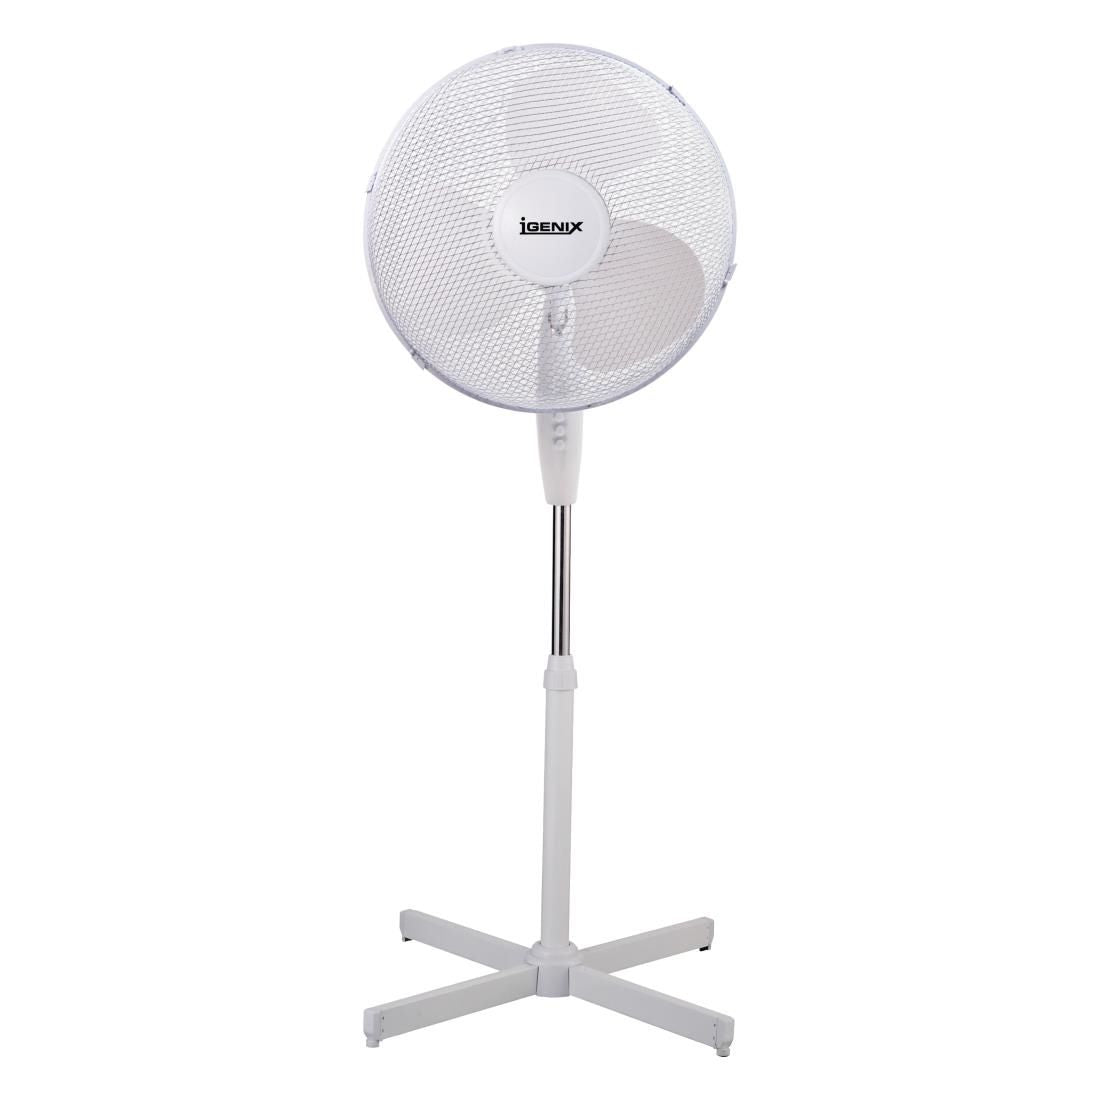 Igenix 16" Oscillating White Stand Fan